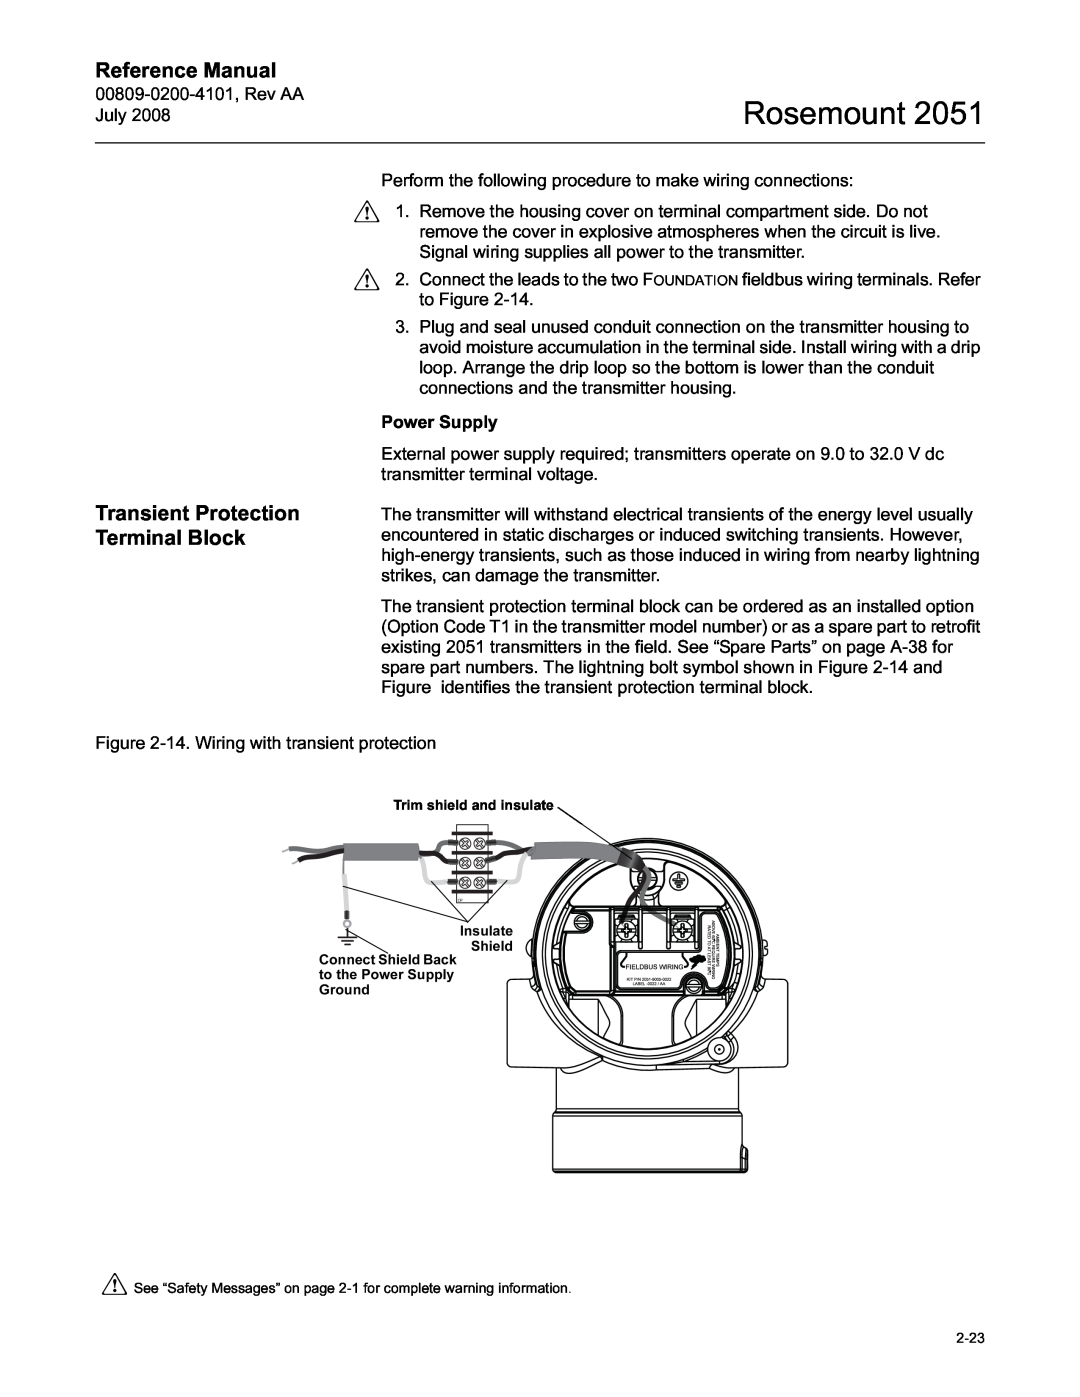 Emerson Process Management 2051 manual Transient Protection Terminal Block, Rosemount, Reference Manual 